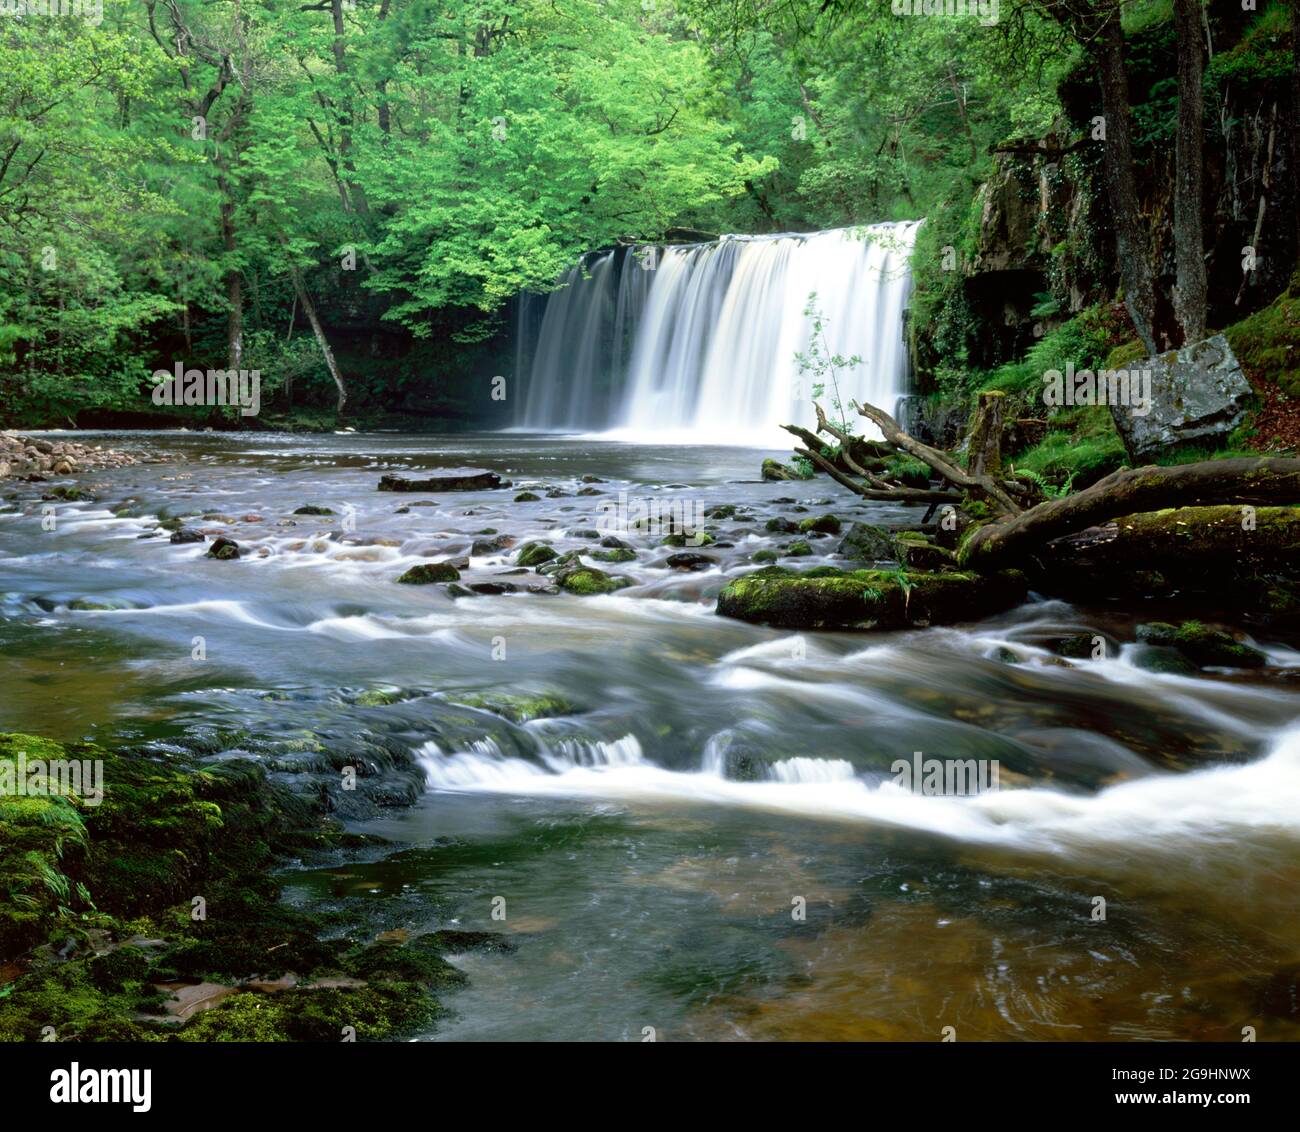 Cascate Scwd Ddwli, fiume Nedd, alta valle di Neath, Ystradfellte, Brecon Beacons National Park, Powys, Galles. Foto Stock